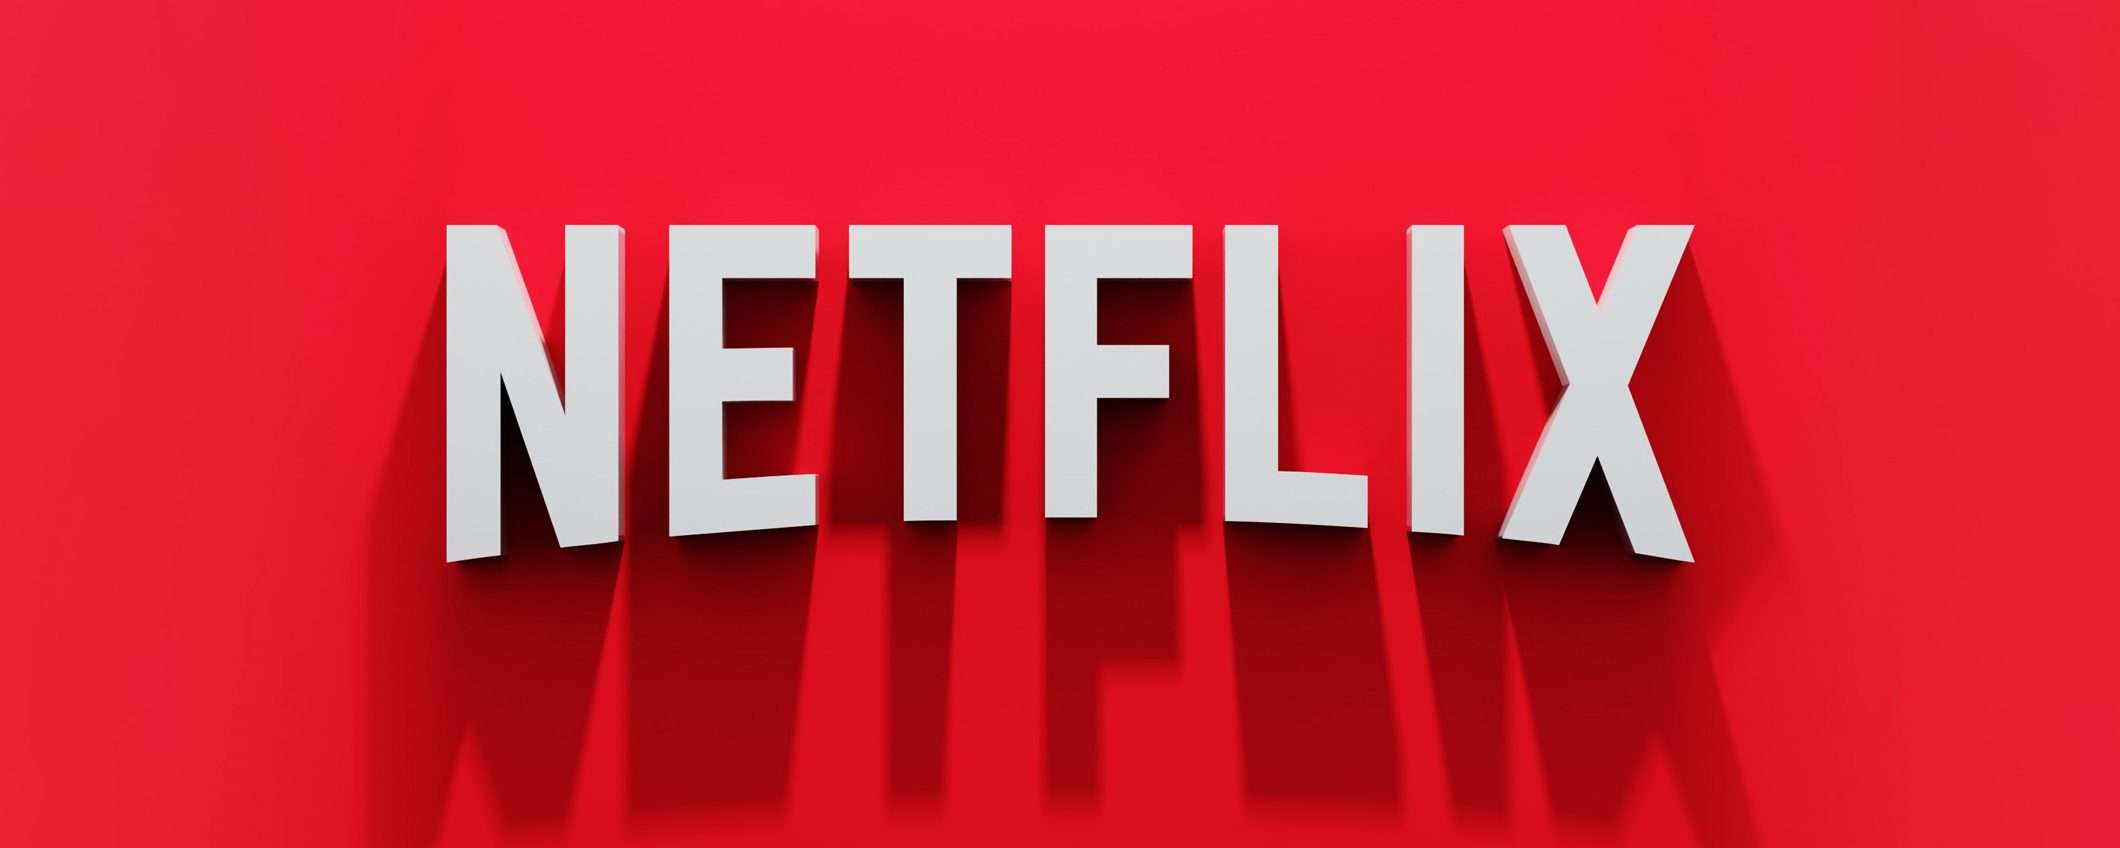 Netflix: episodio senza pubblicità per i binge watcher